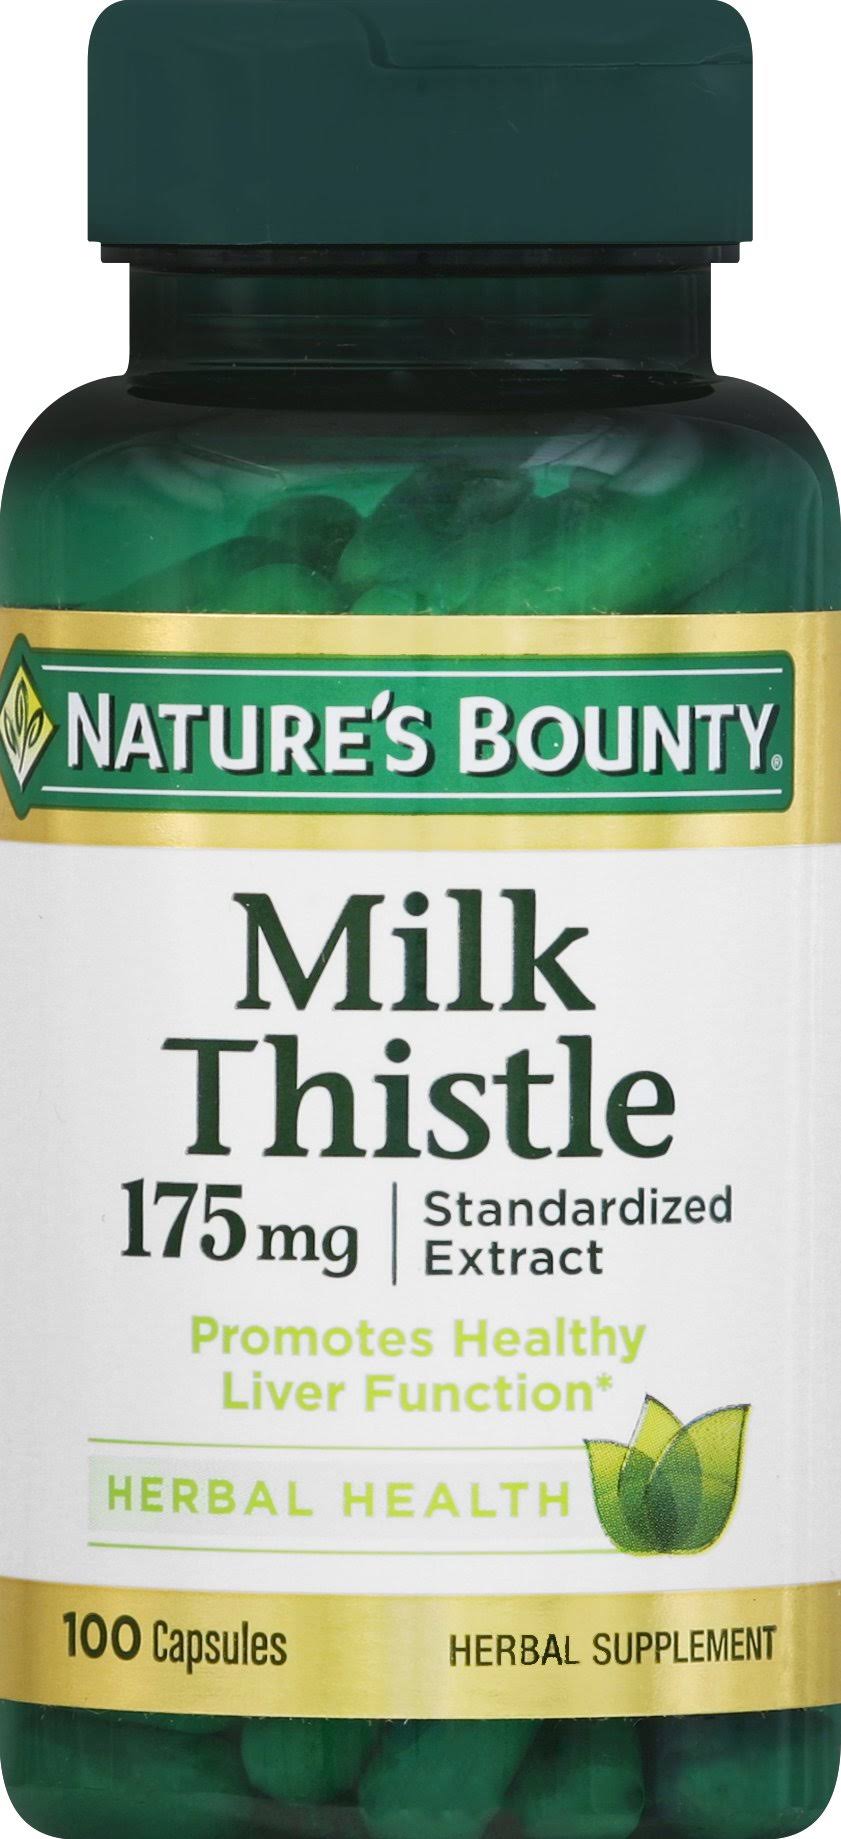 Nature's Bounty Milk Thistle Capsules - 100 Capsules, 175mg